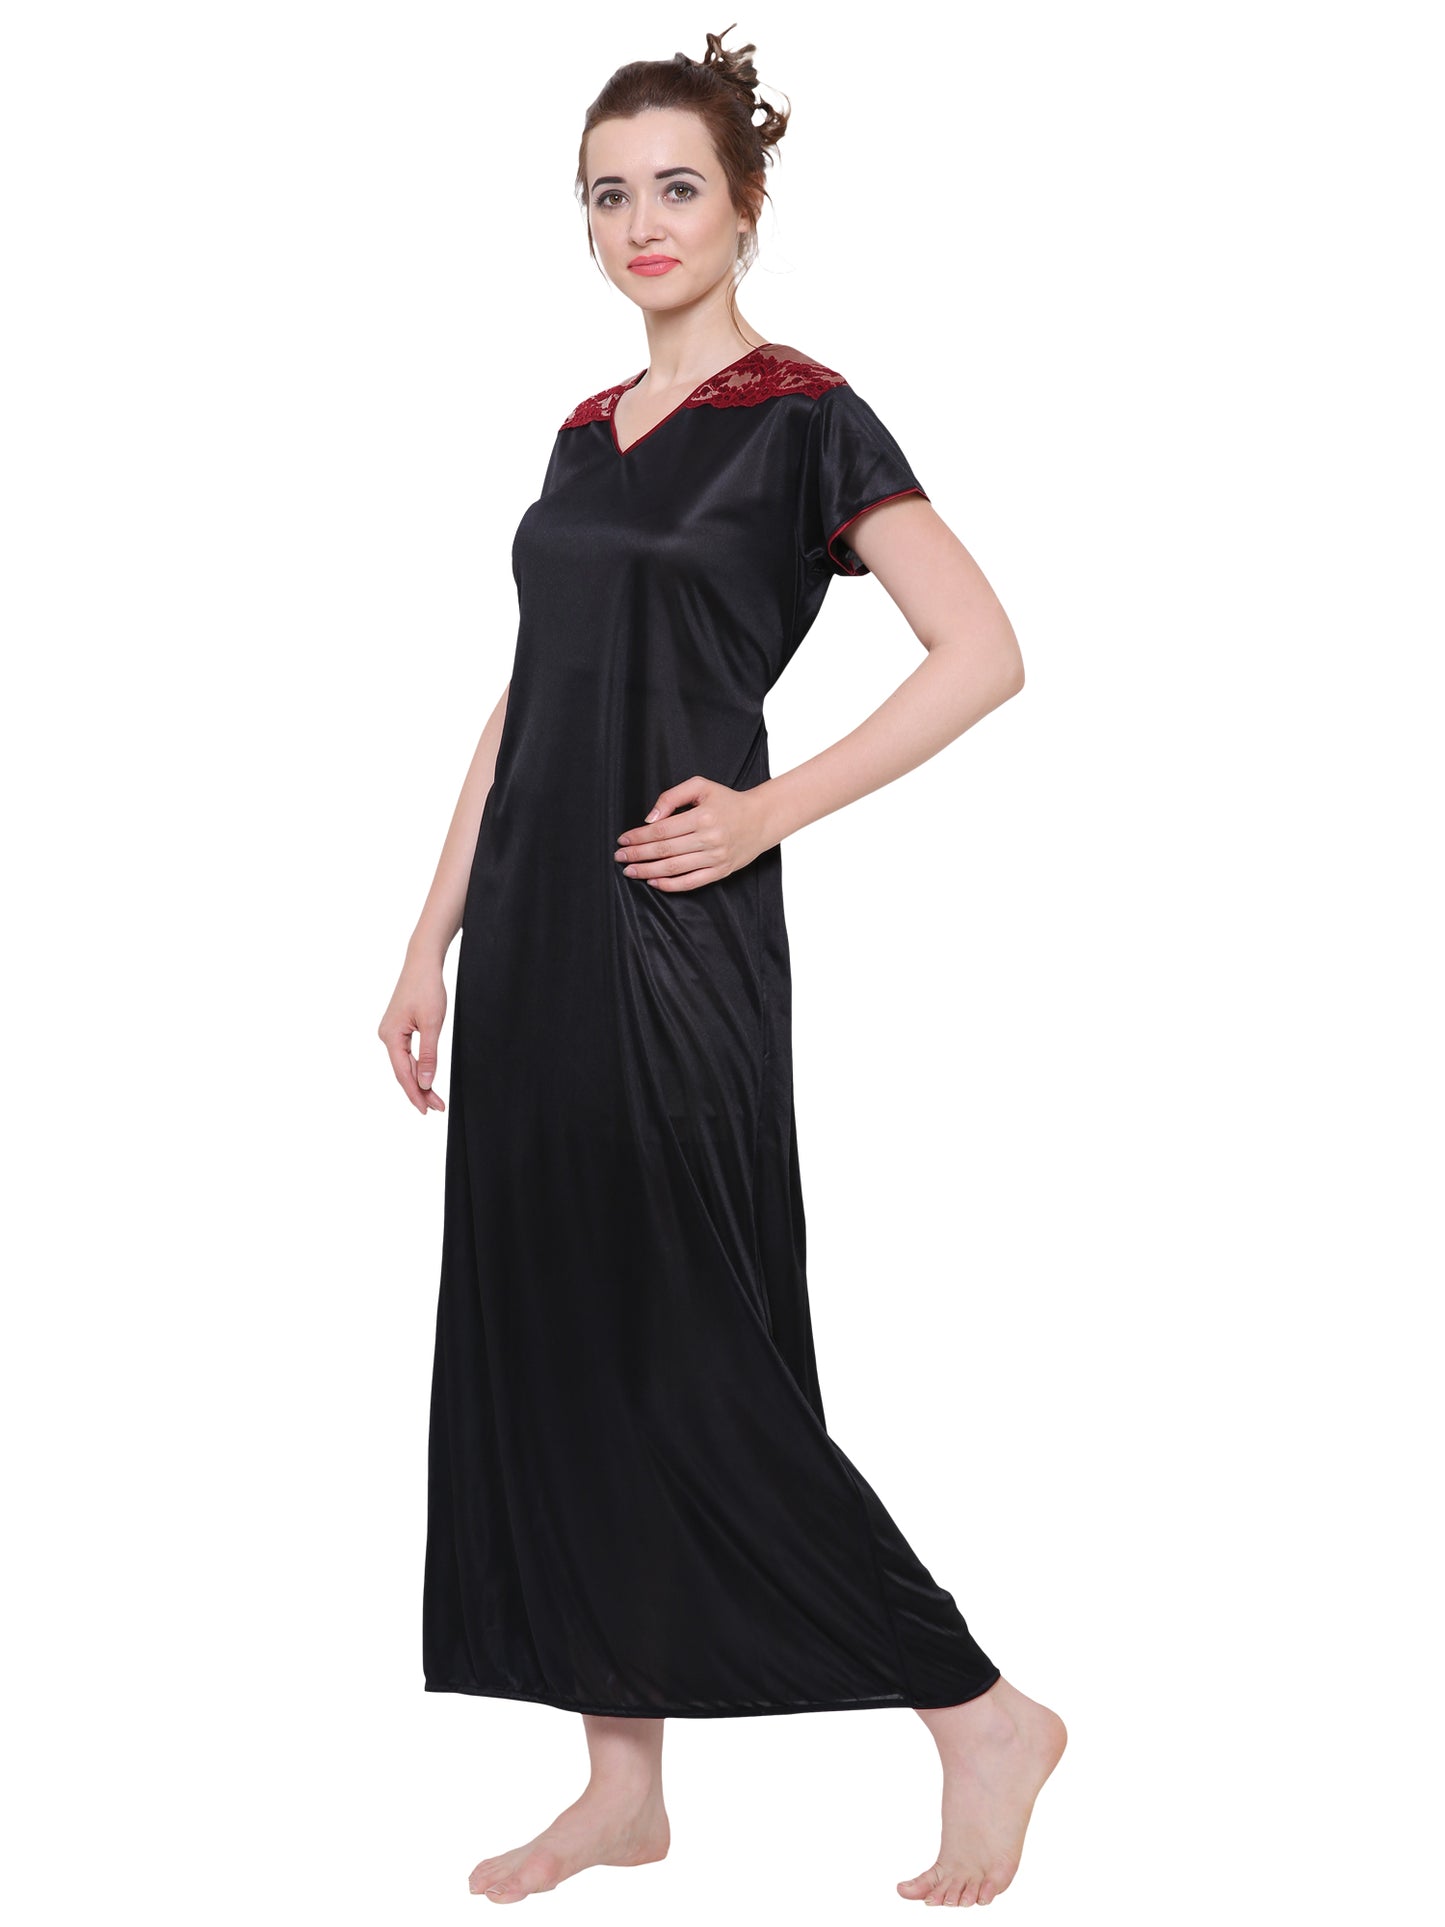 Plus Size Women Satin Black V Neck Maxi Nightdress With Lace Detailing (Size XS-10XL)